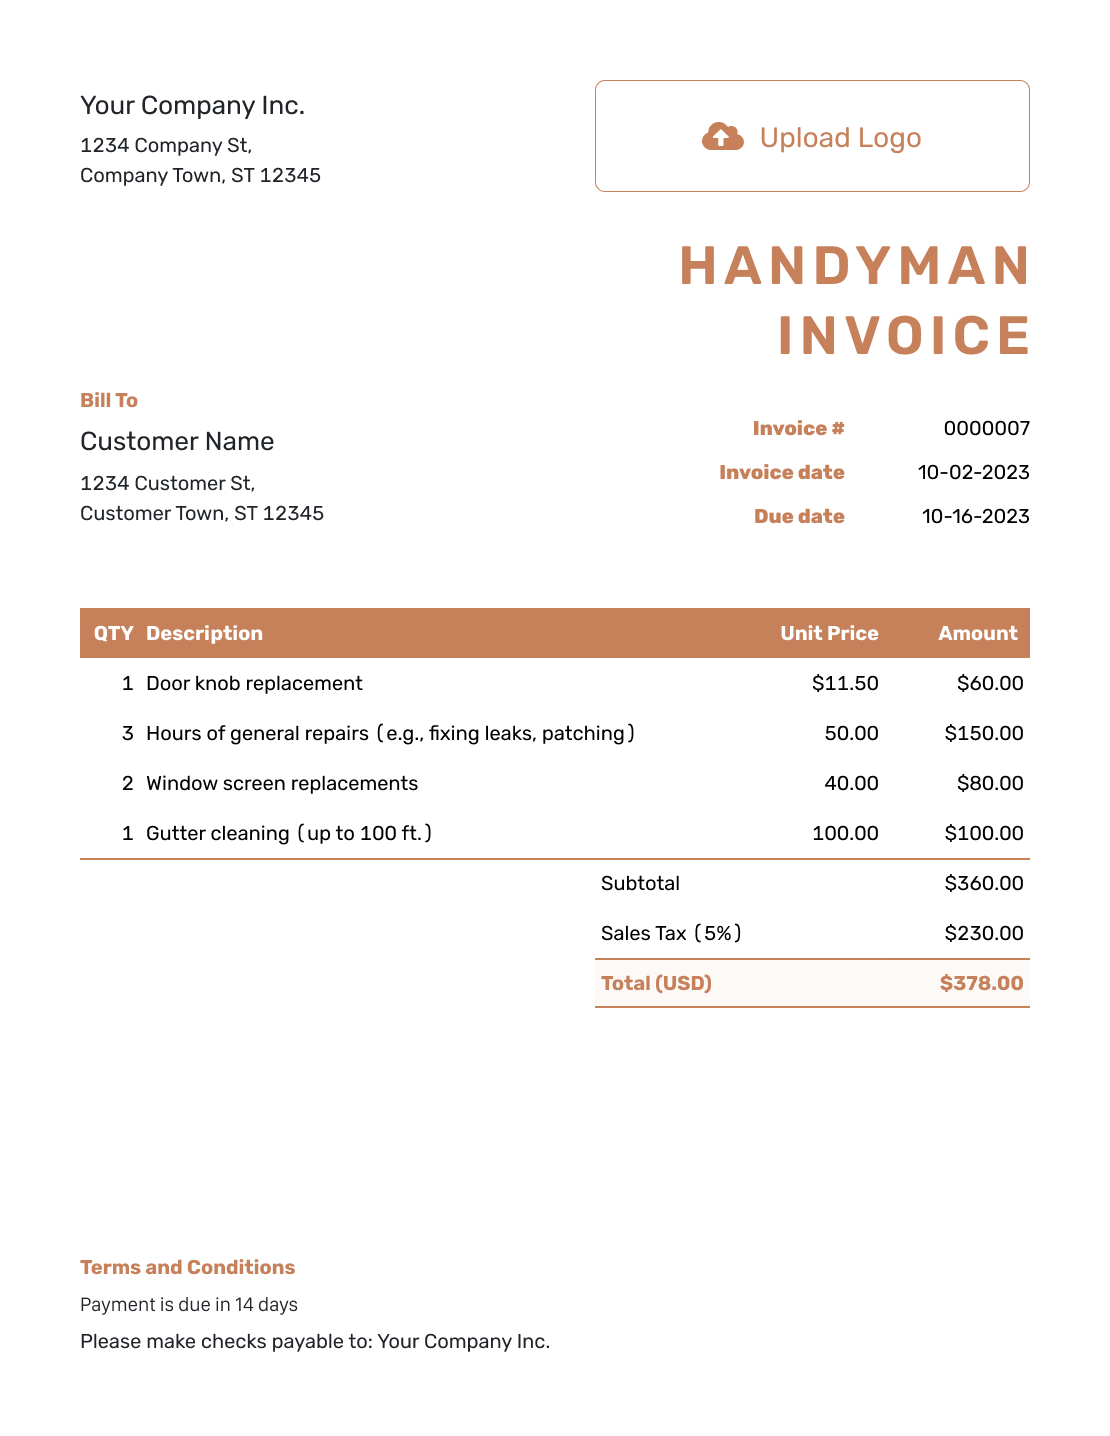 Standard Handyman Invoice Template